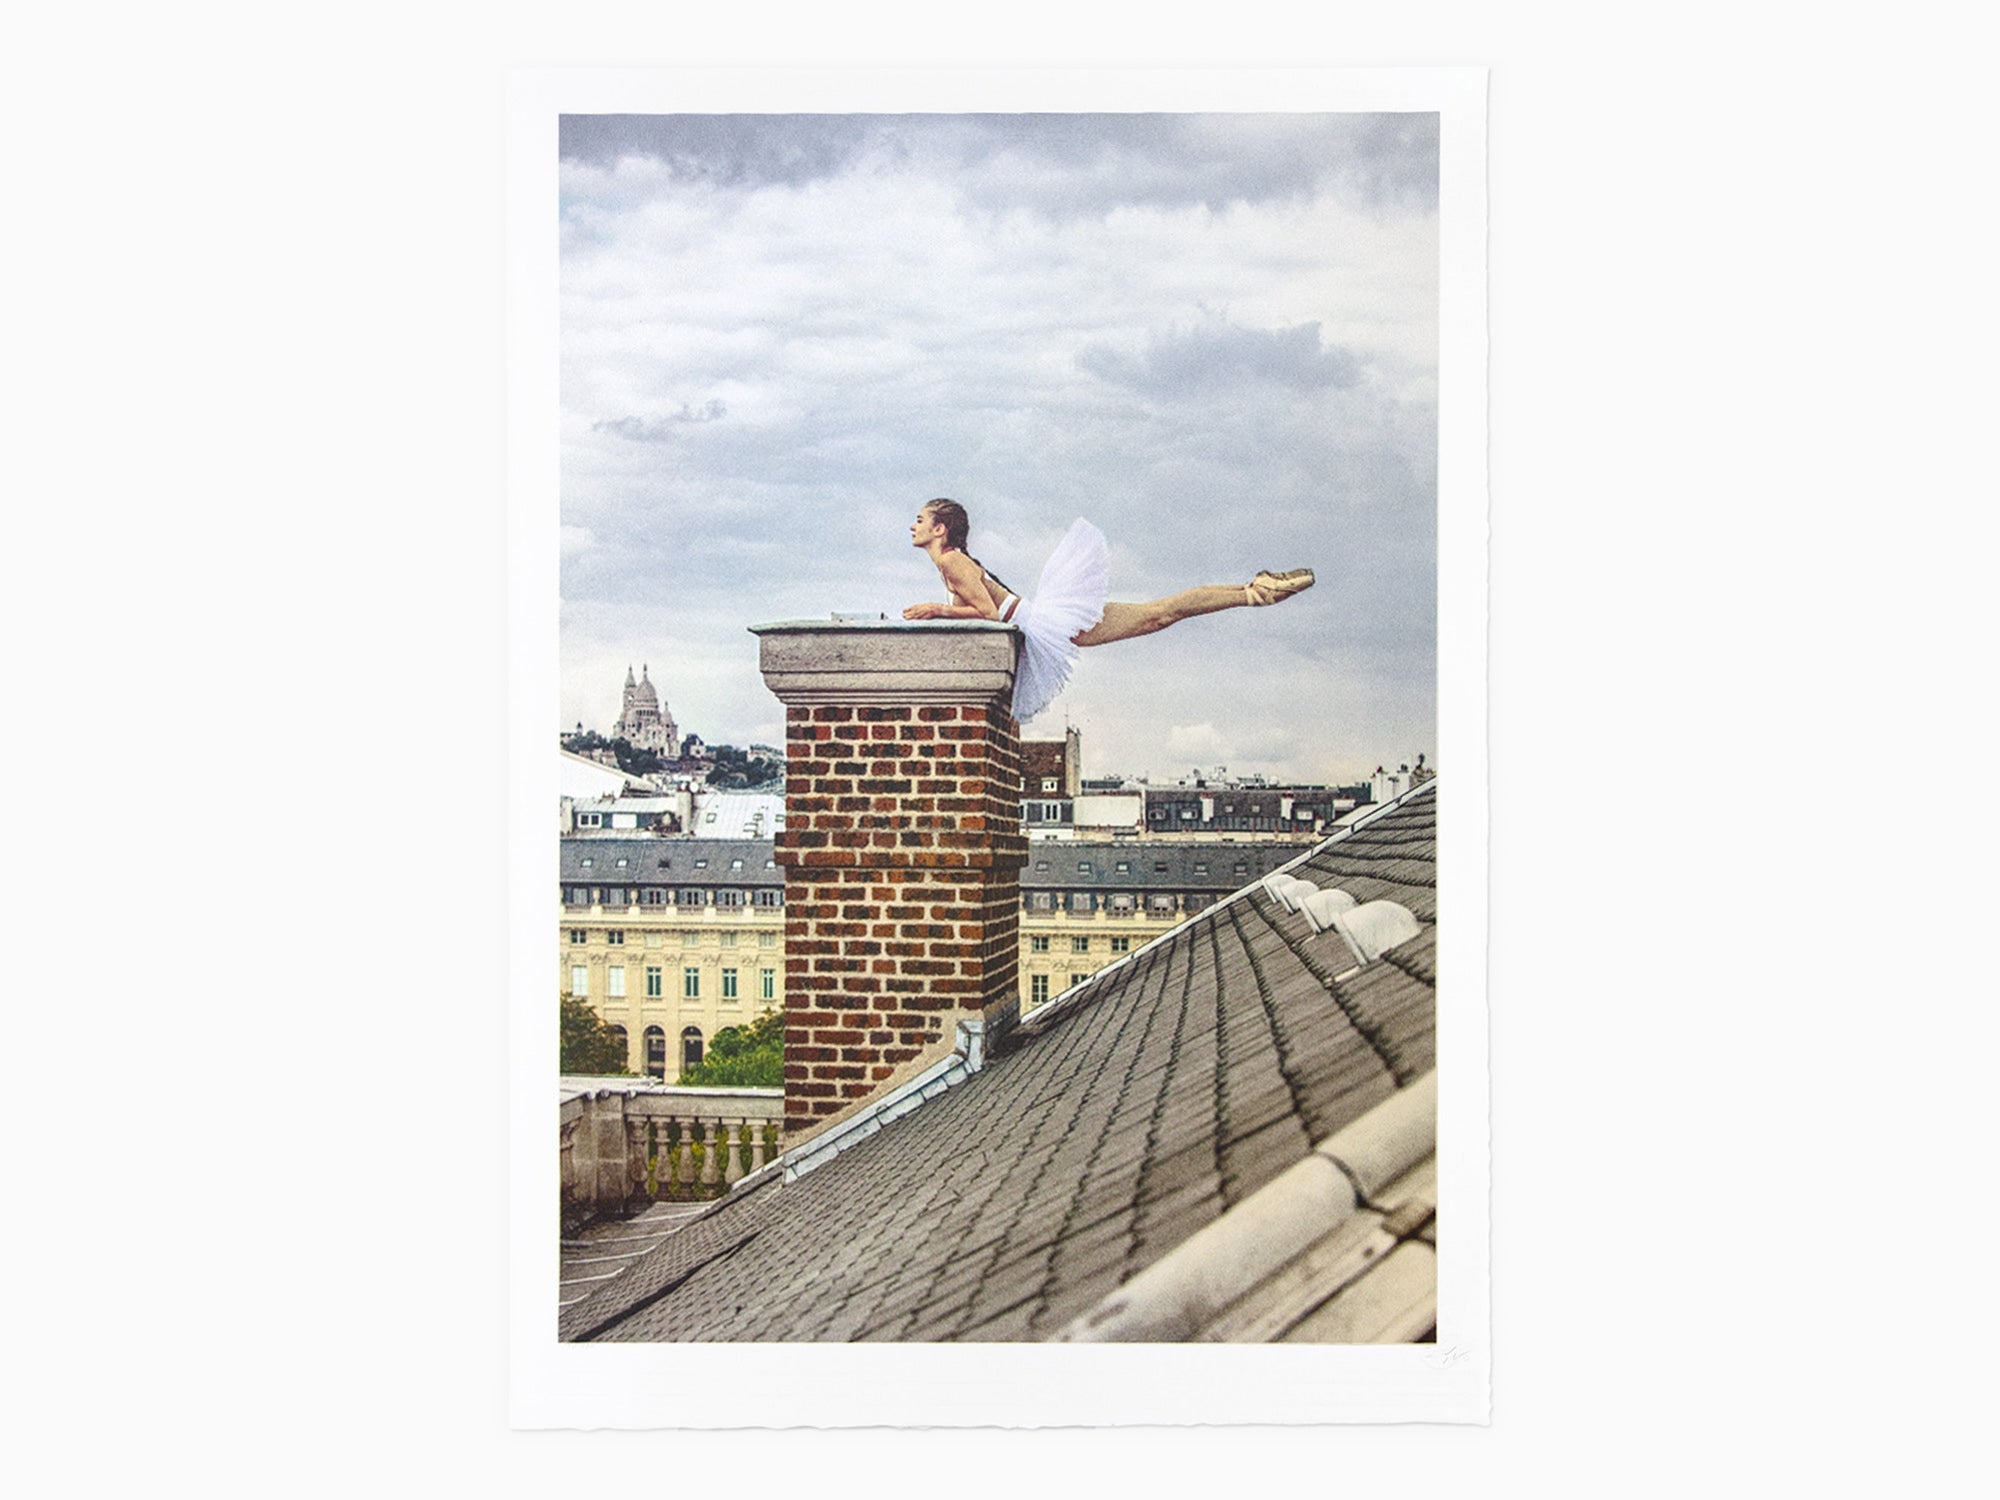 JR - Ballet, Palais Royal, Paris, France, 2020